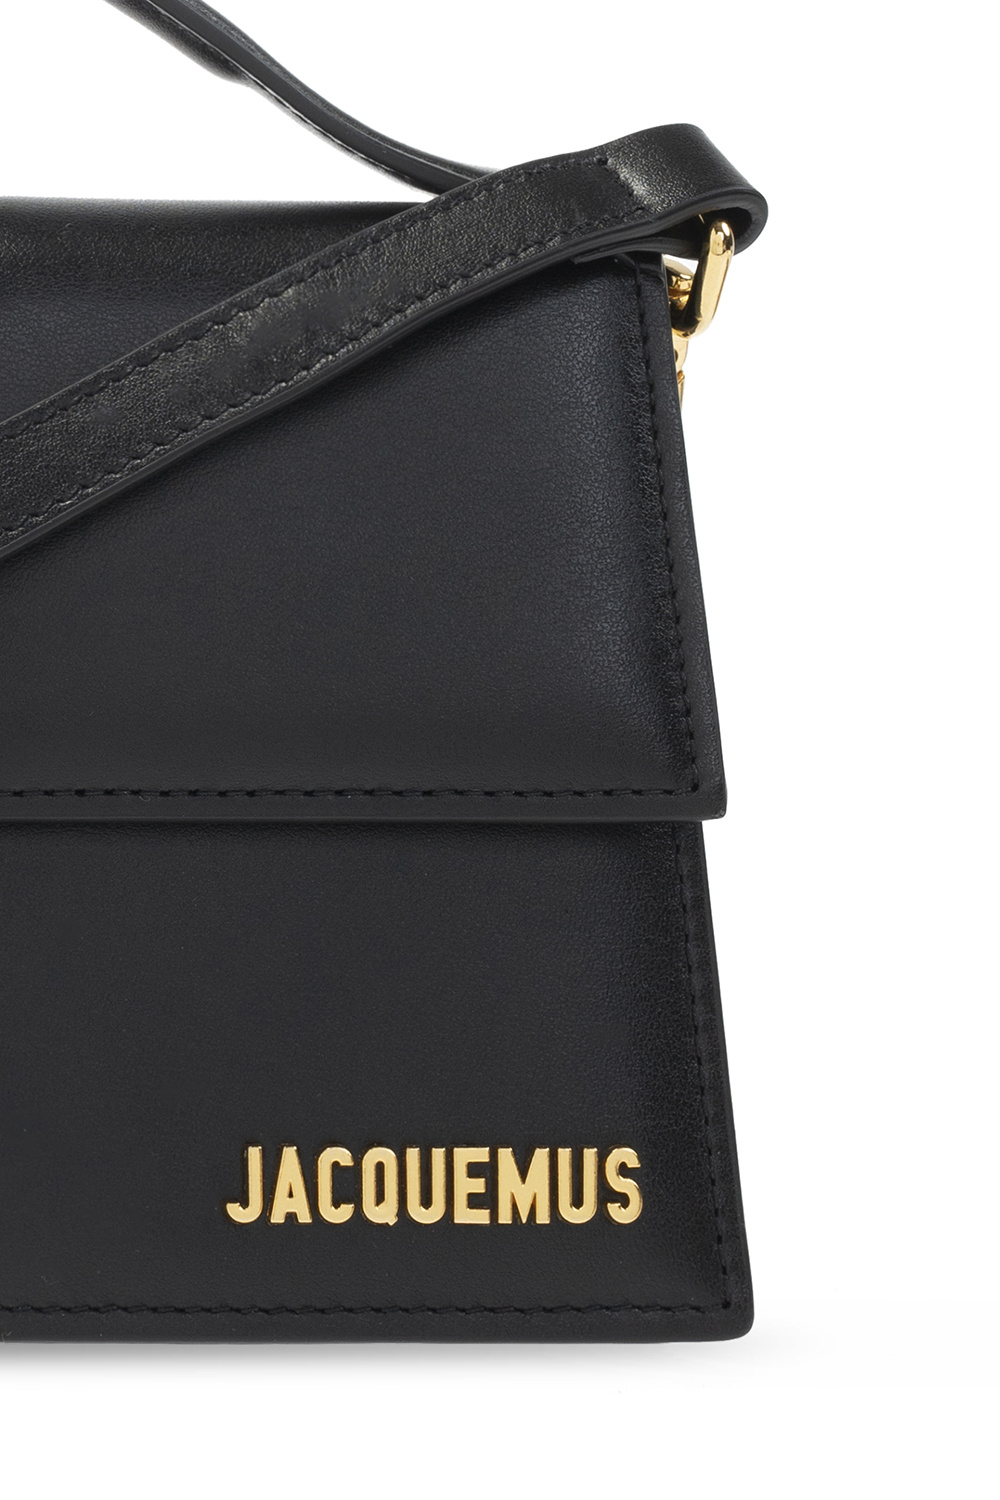 Jacquemus ‘Le Grand Bambino’ shoulder Grosgrain bag